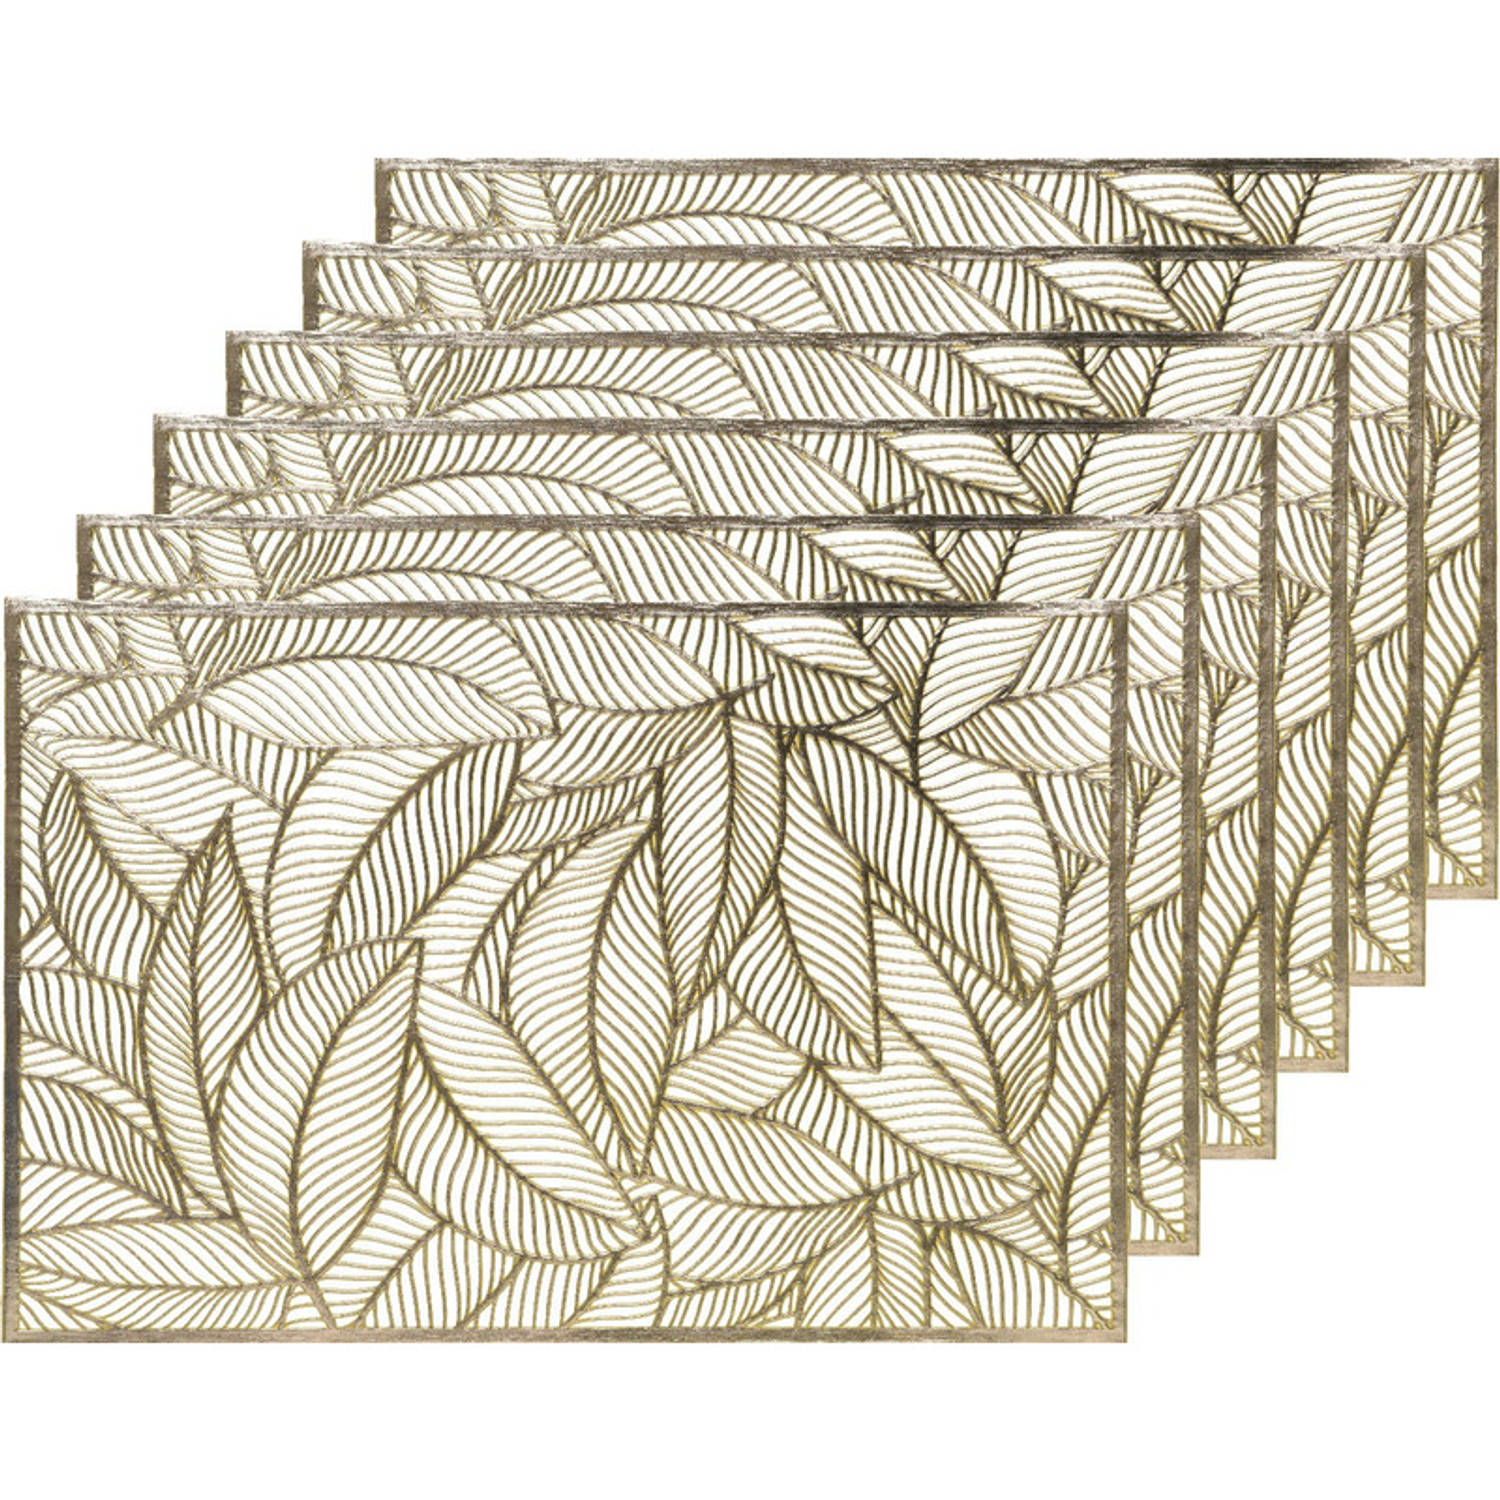 6x Placemat/onderzetter goud 30 x 45 cm bladeren motief - Placemats